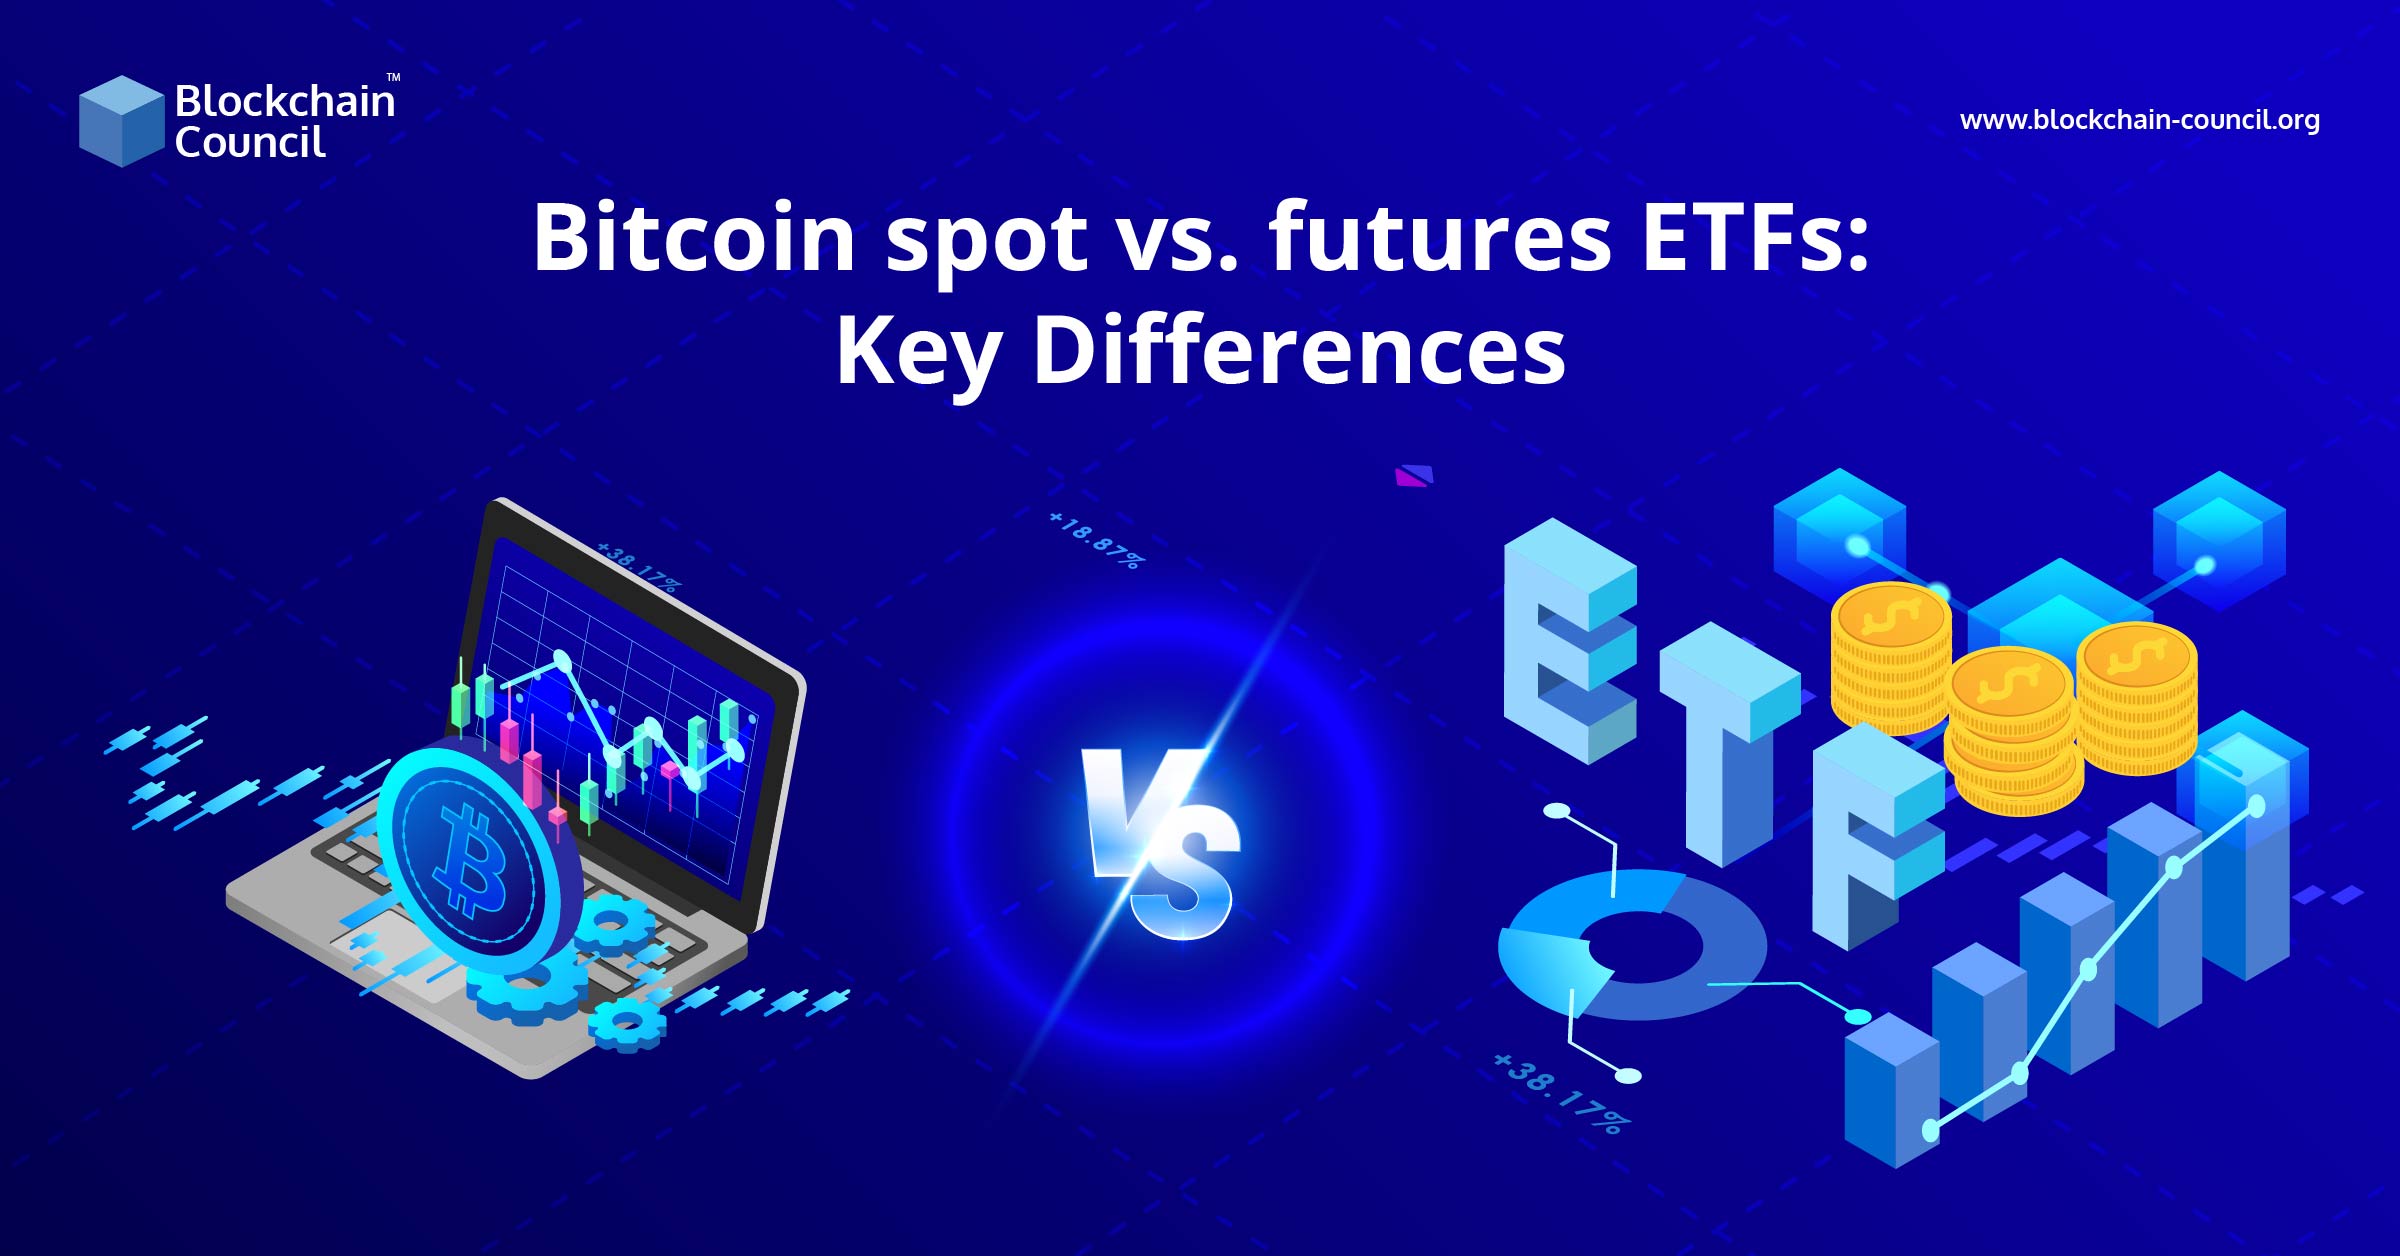 Bitcoin spot vs. futures ETFs Key Differences